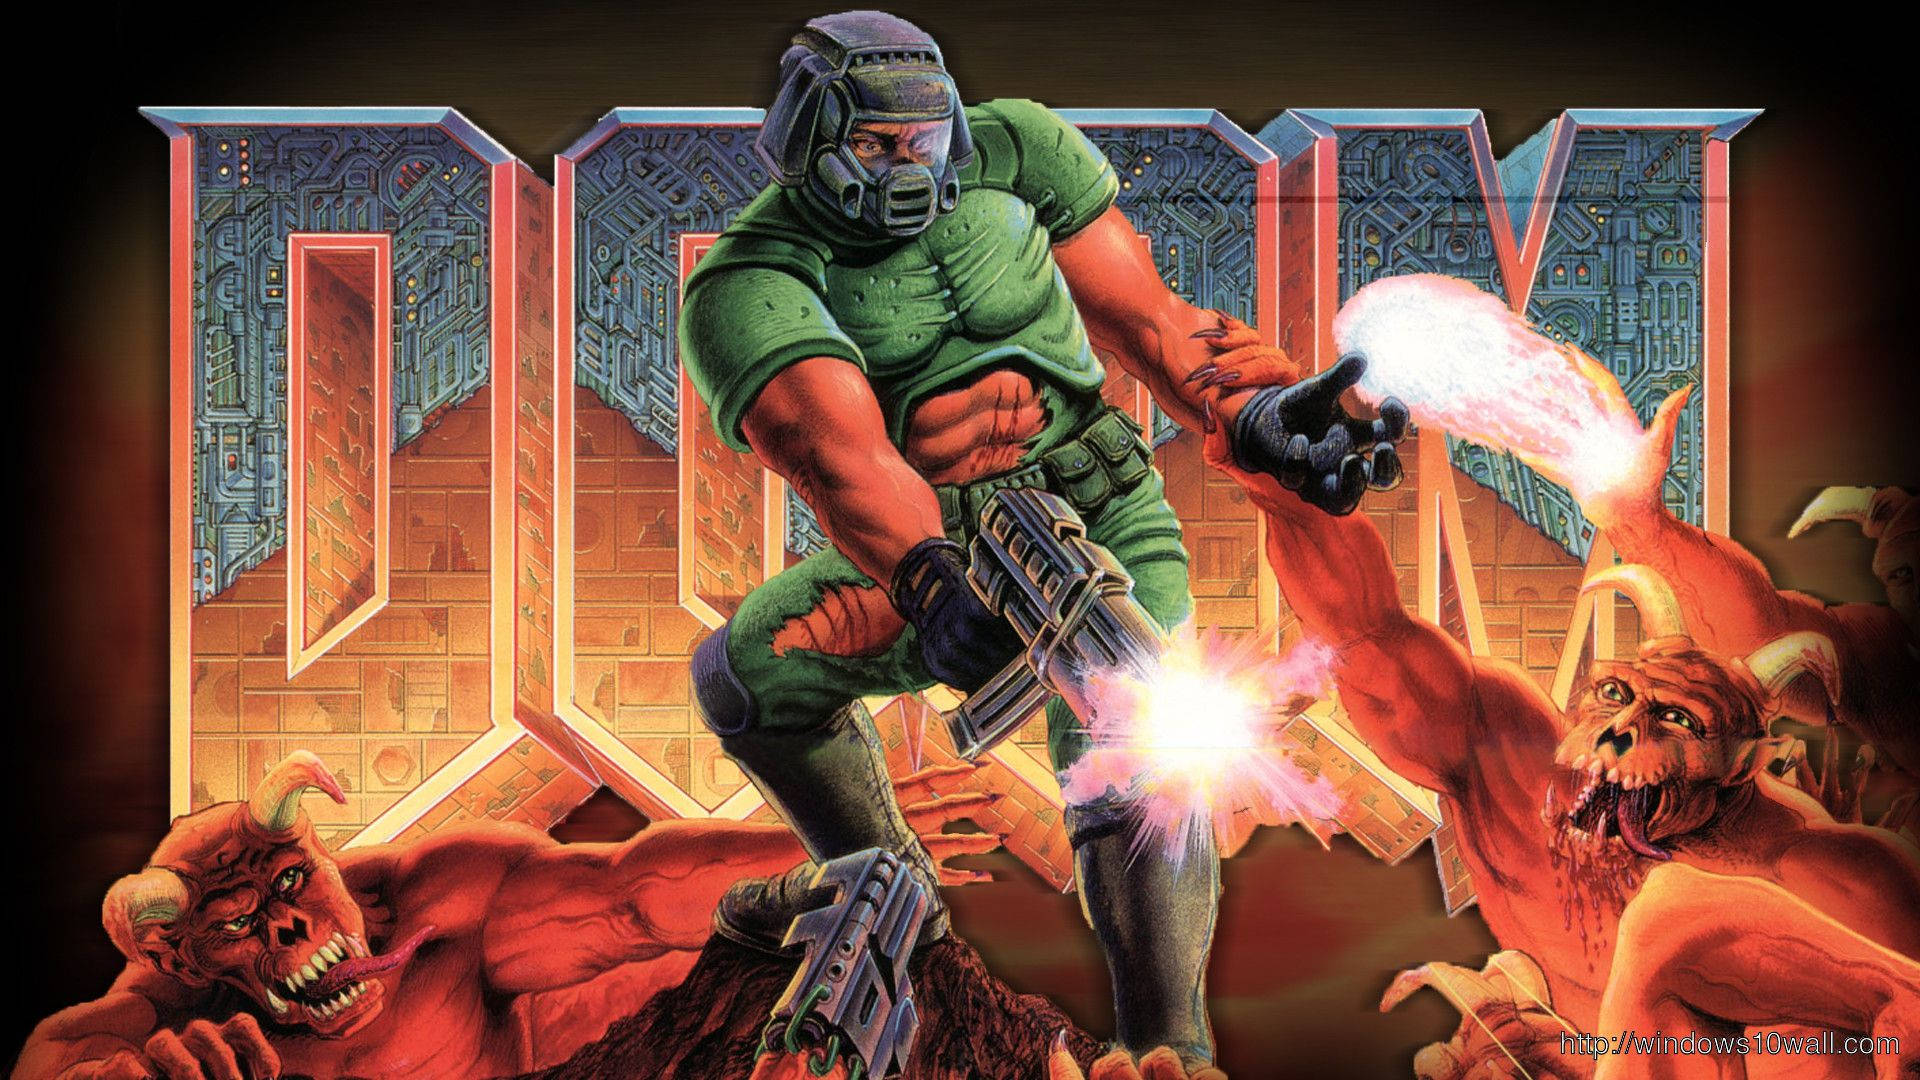 Doom Game Background